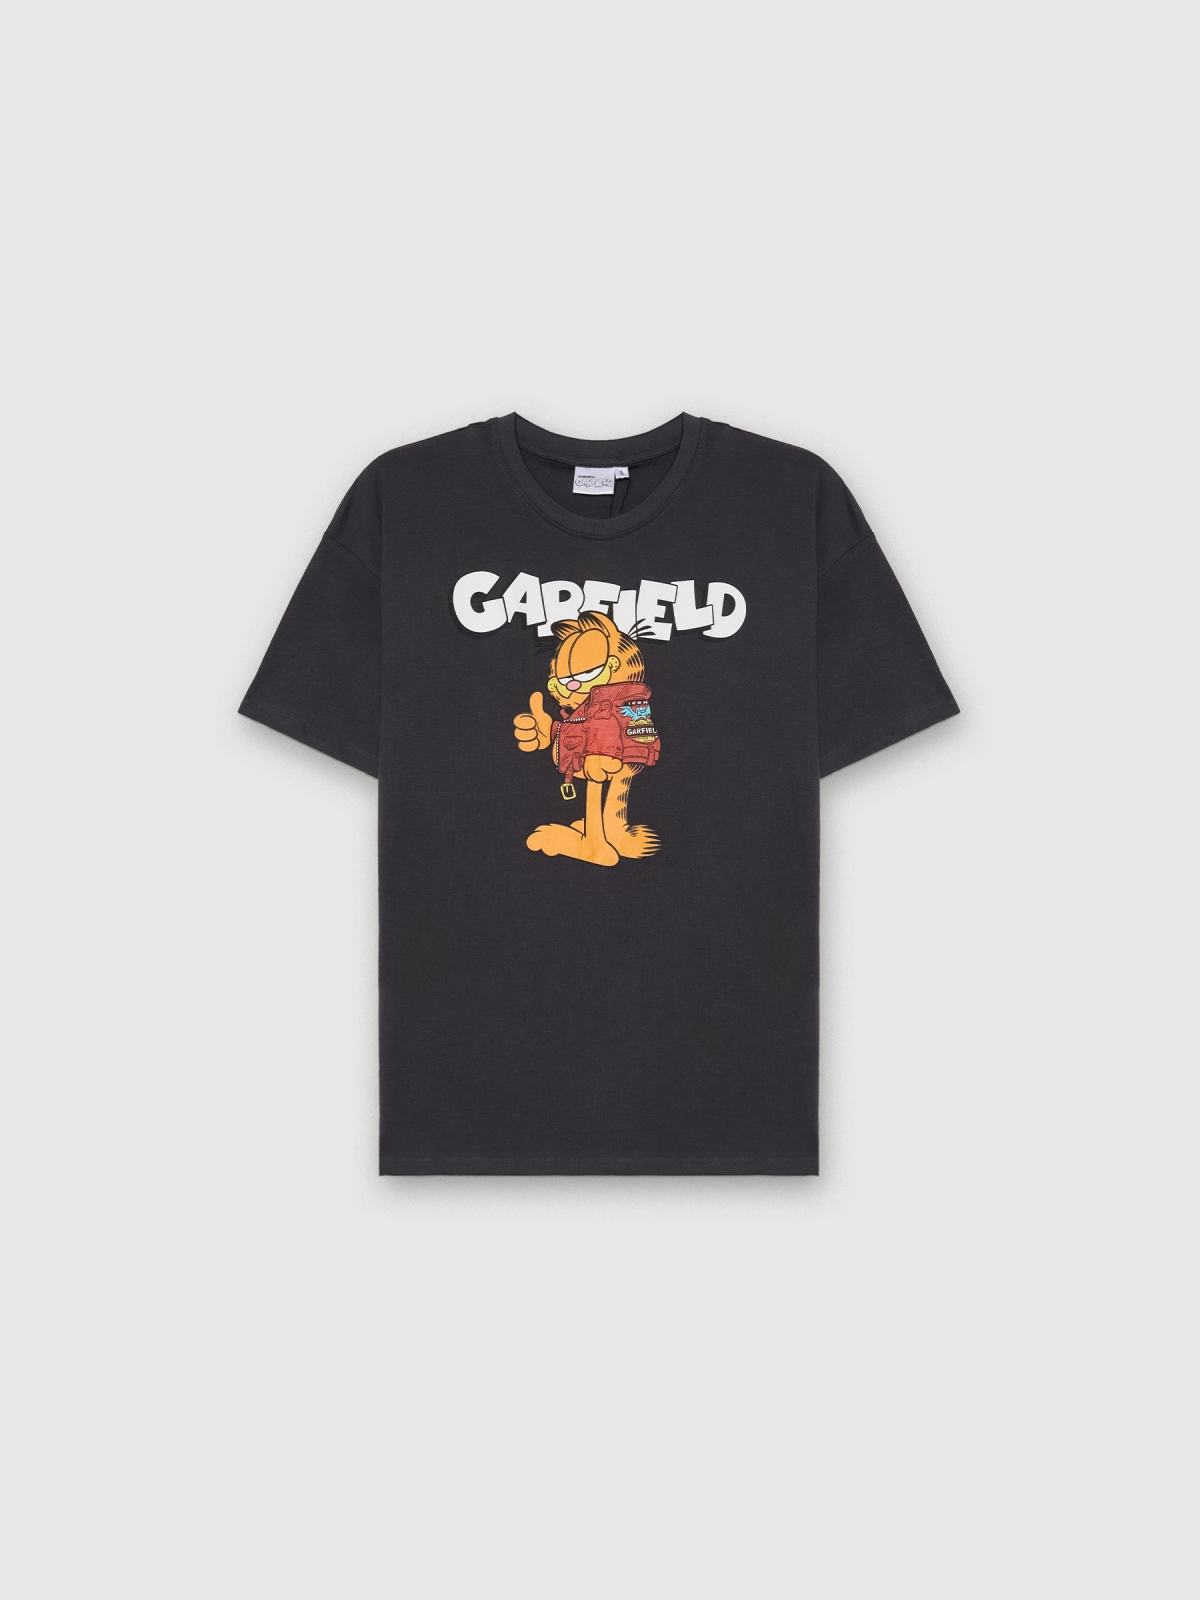  Garfield oversize t-shirt dark grey